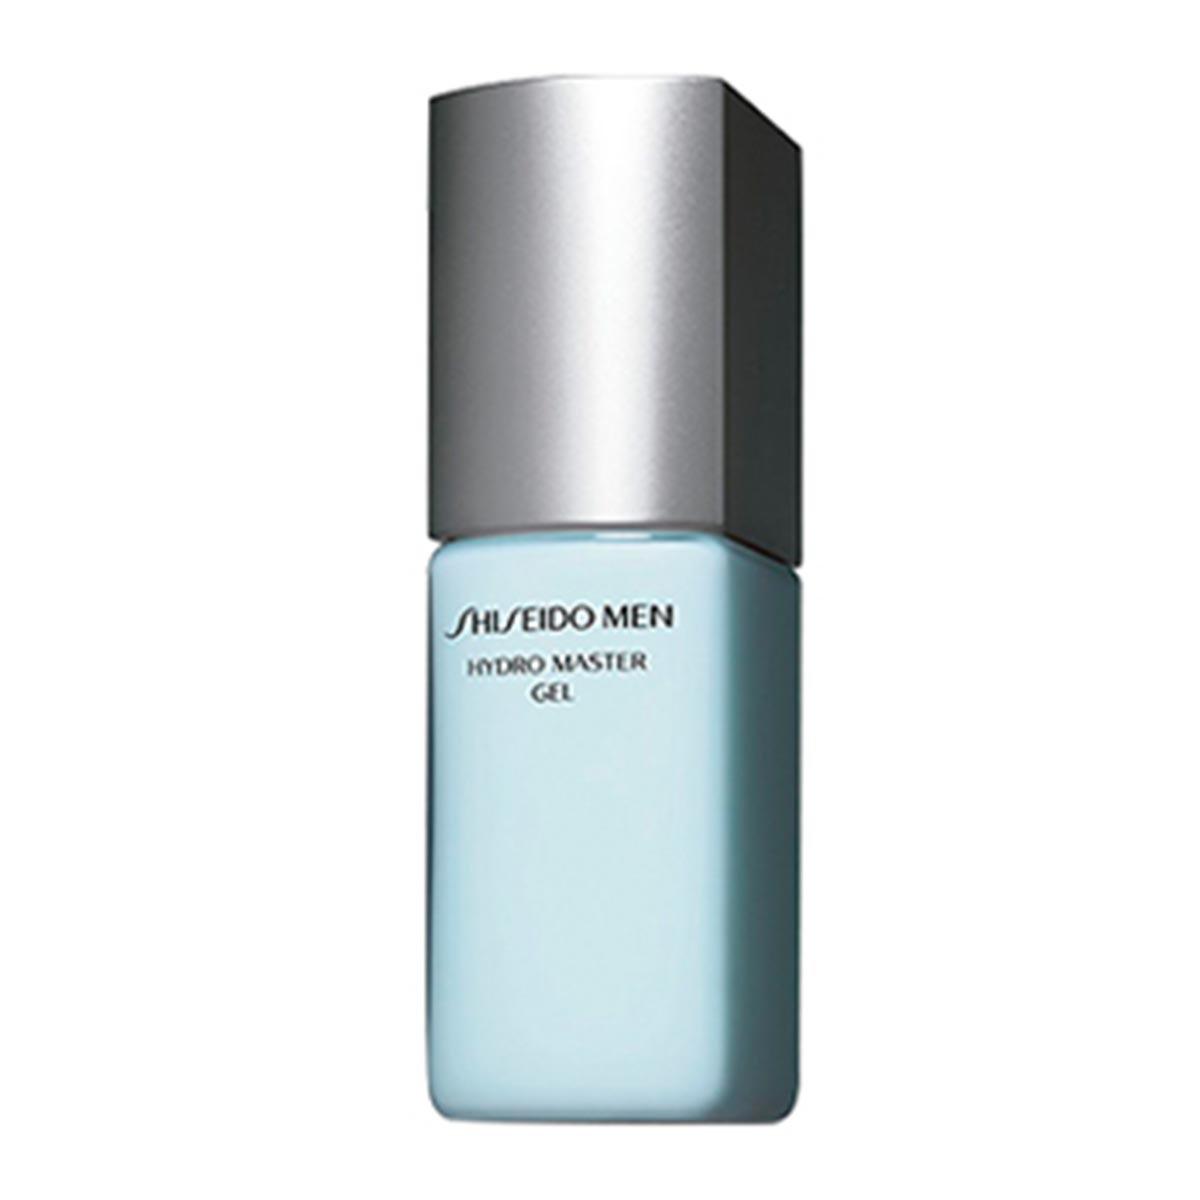 shiseido-men-hydro-master-gel-75ml